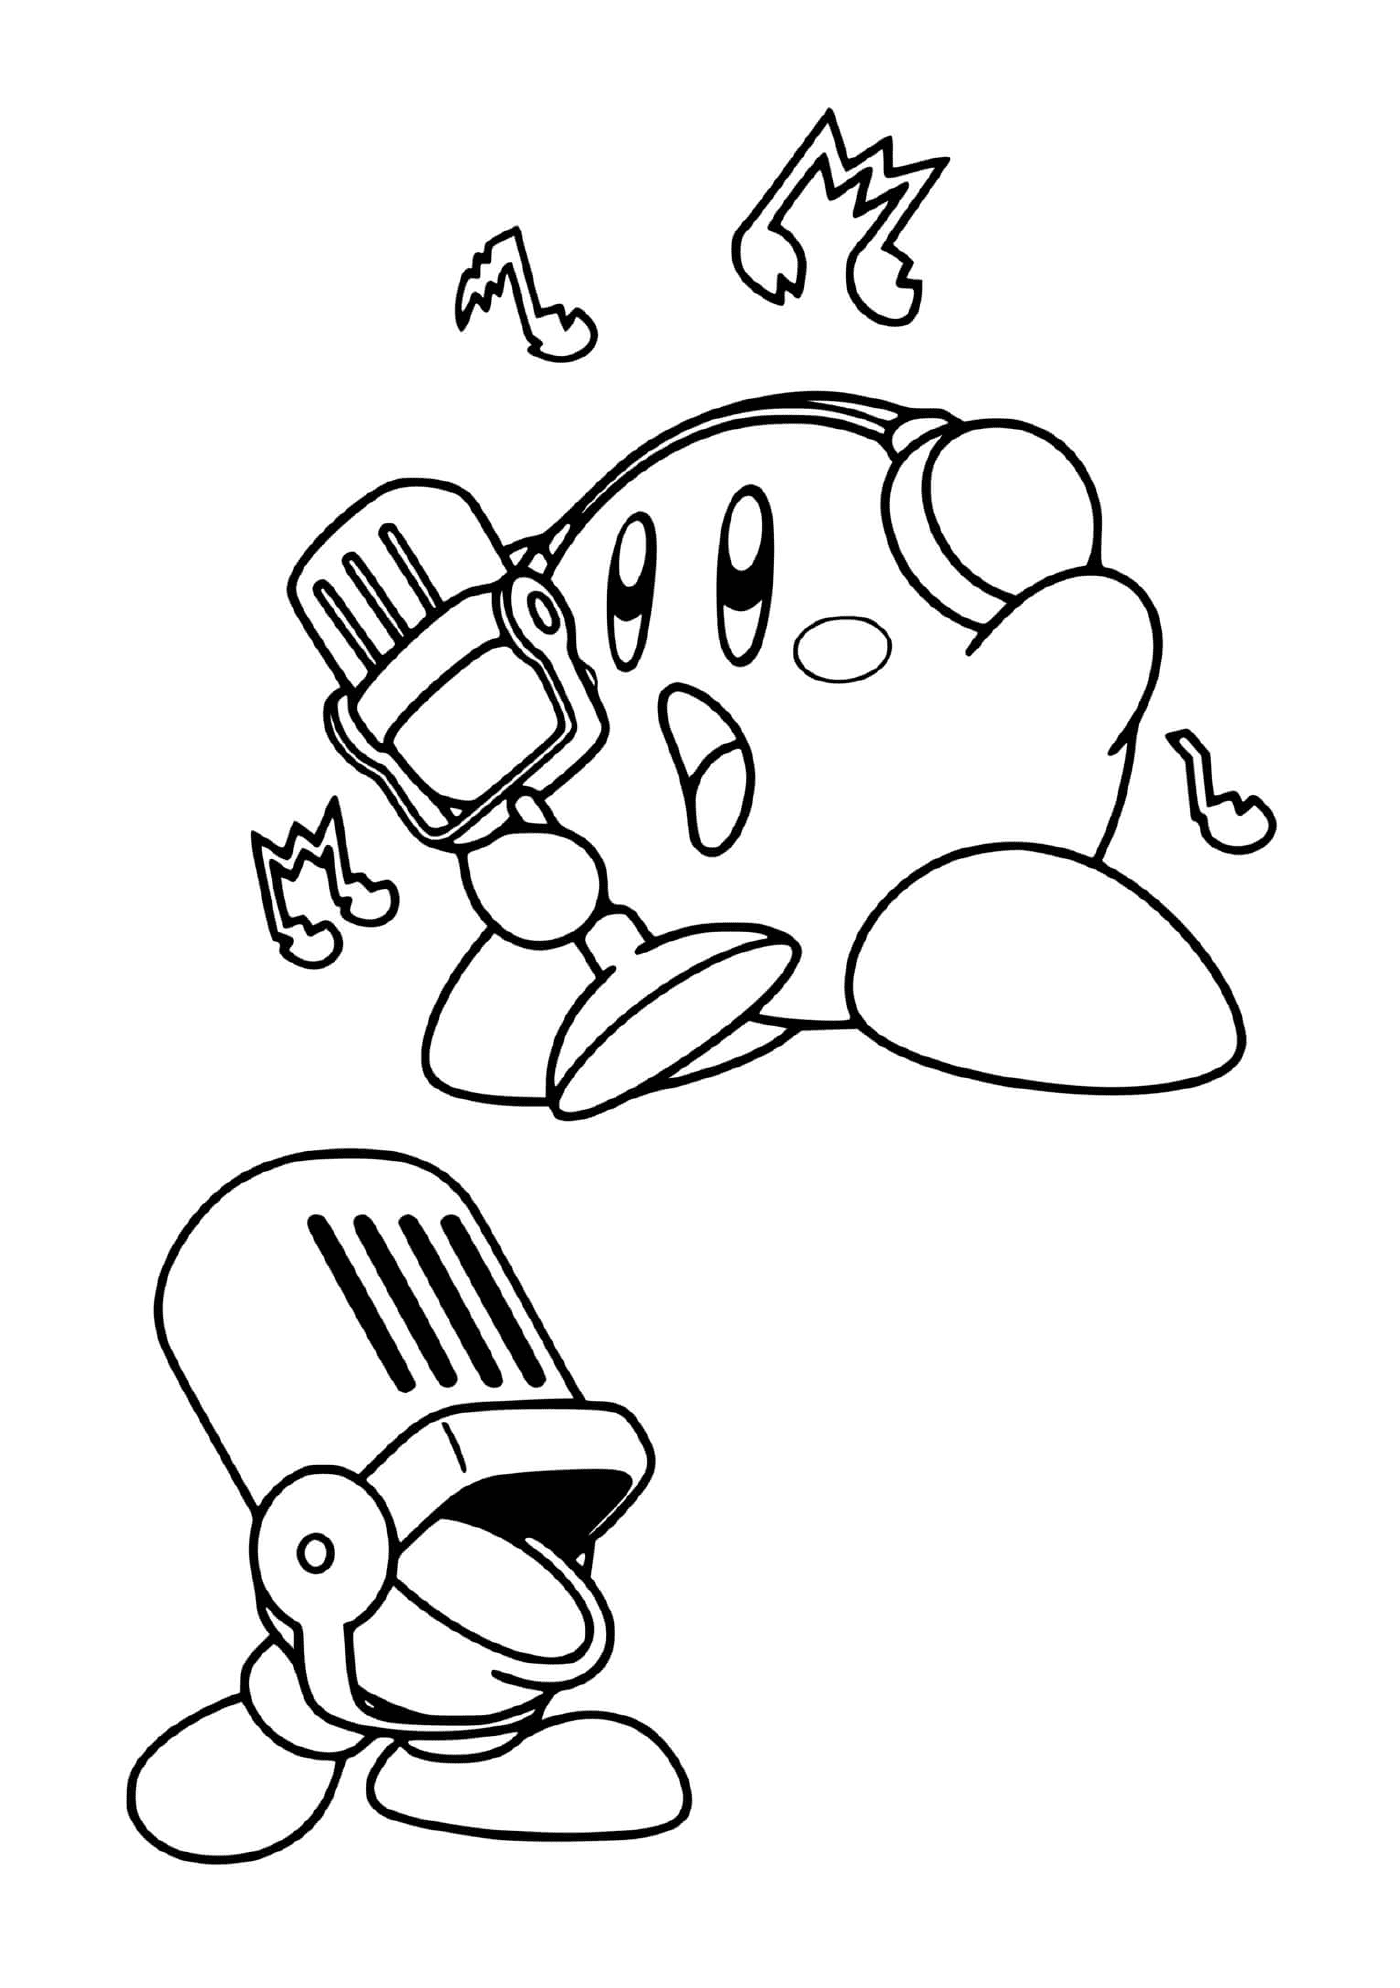  Kirby talentuoso con microfono 